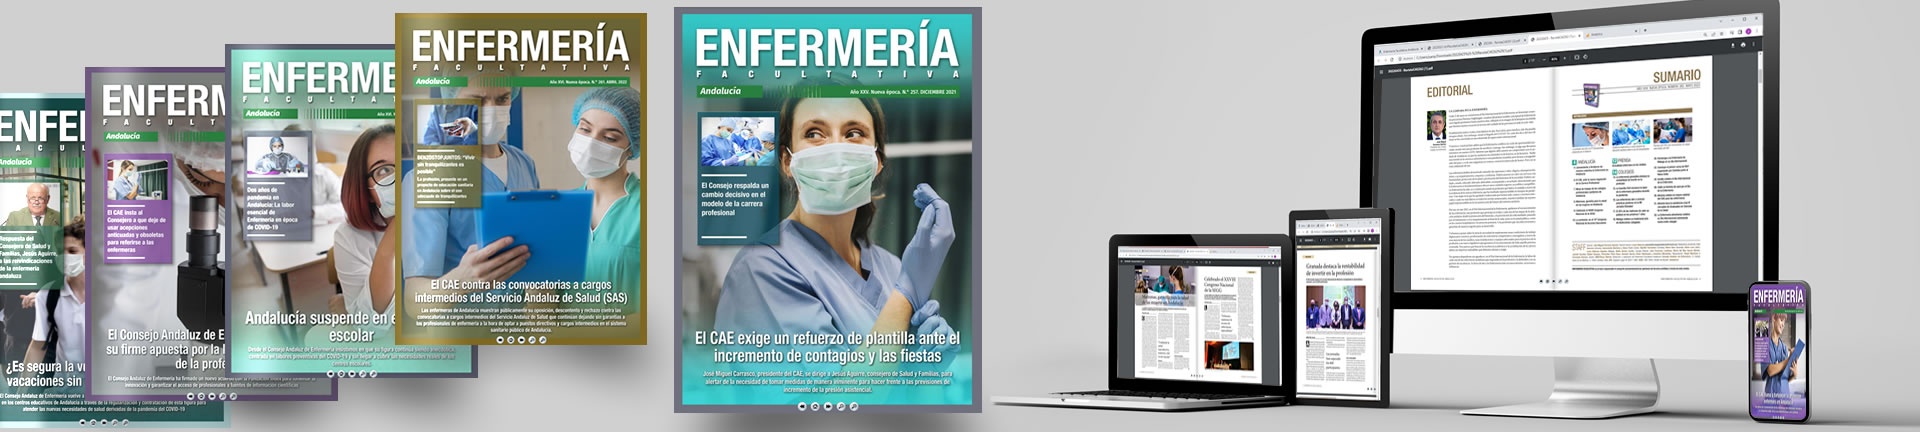 Consejo Andaluz de Colegios de Enfermería - CAE - Revista Enfermería Facultativa número 257 - Edición Andalucía